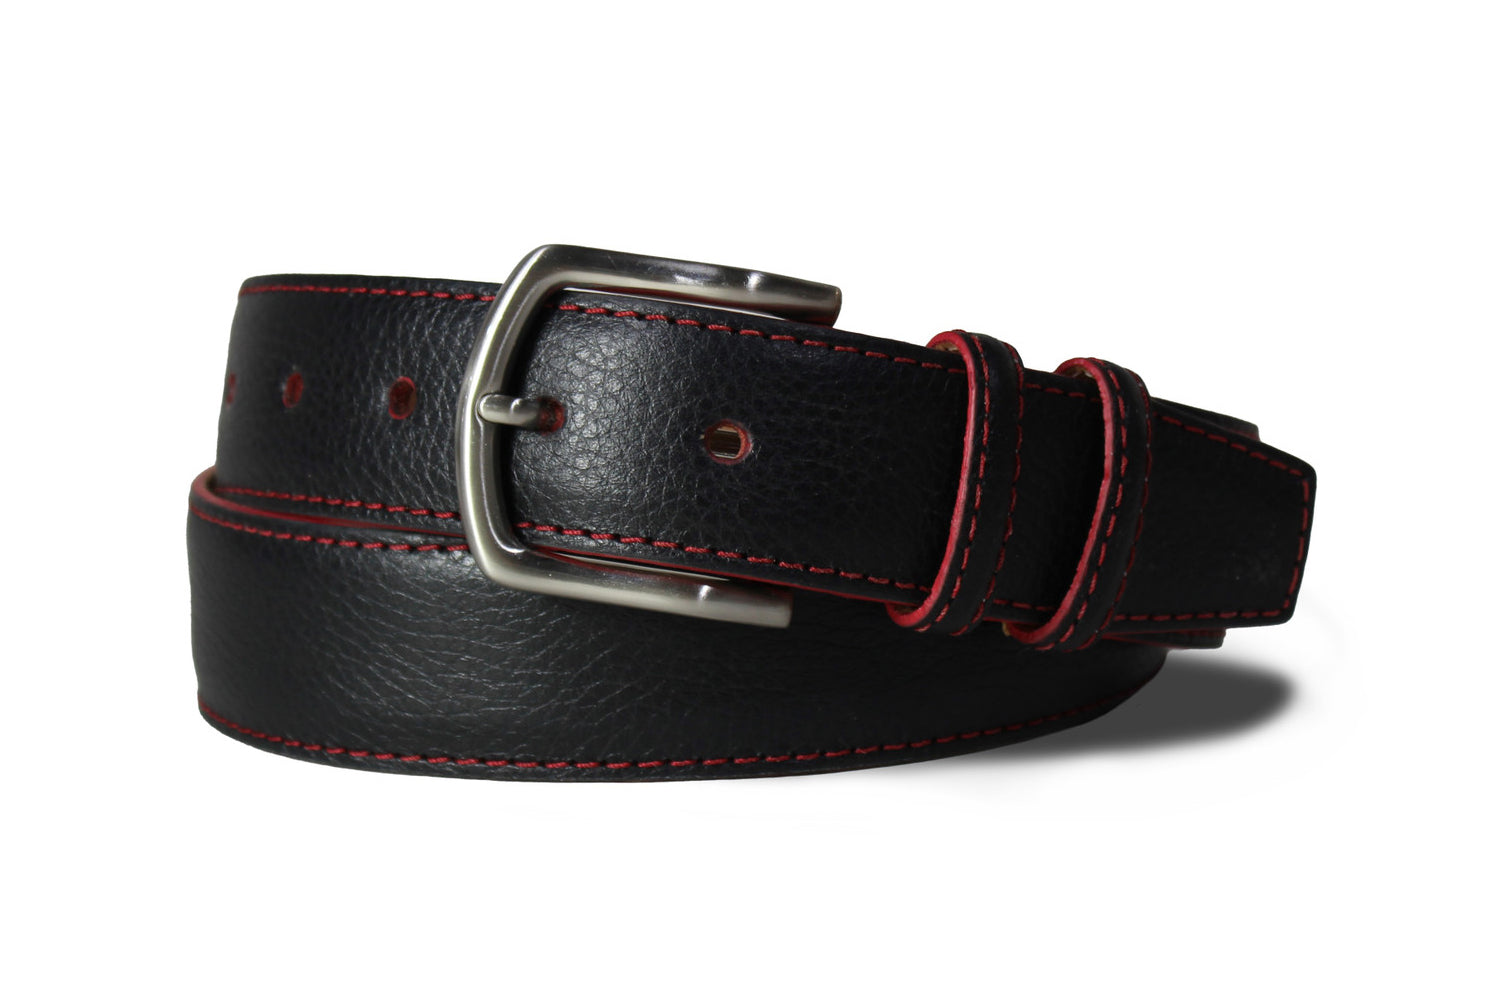 Royal blue ostrich belt - Luxury custom-made belts